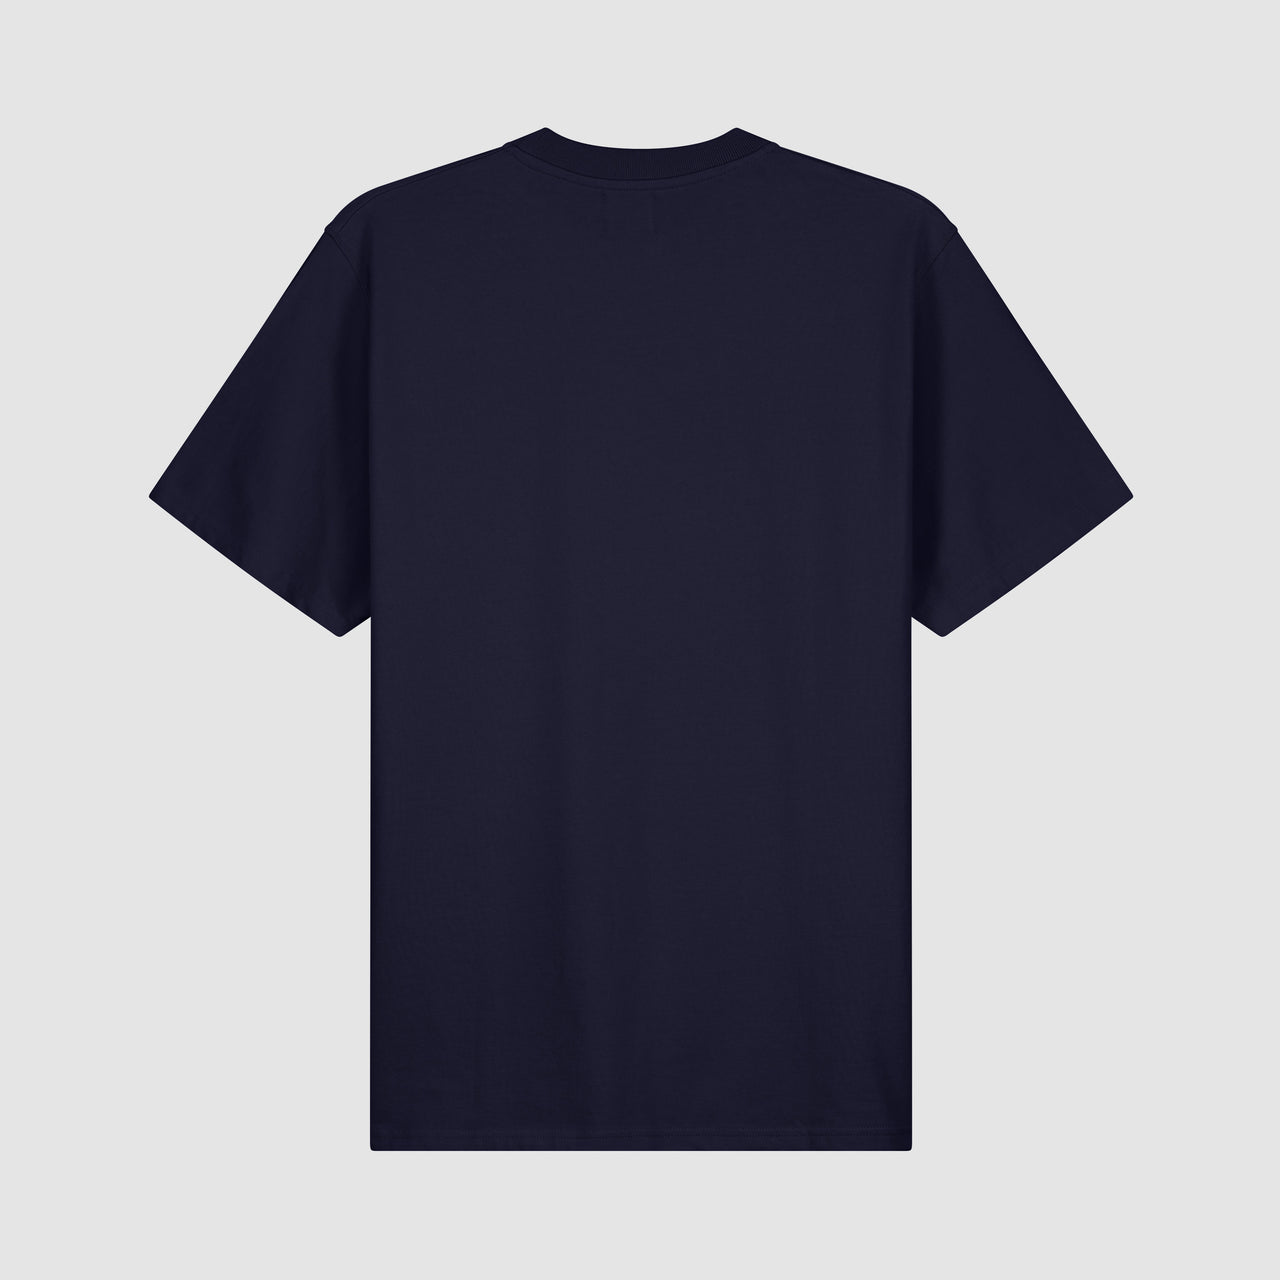 Teo Arte Front T-Shirt - Navy